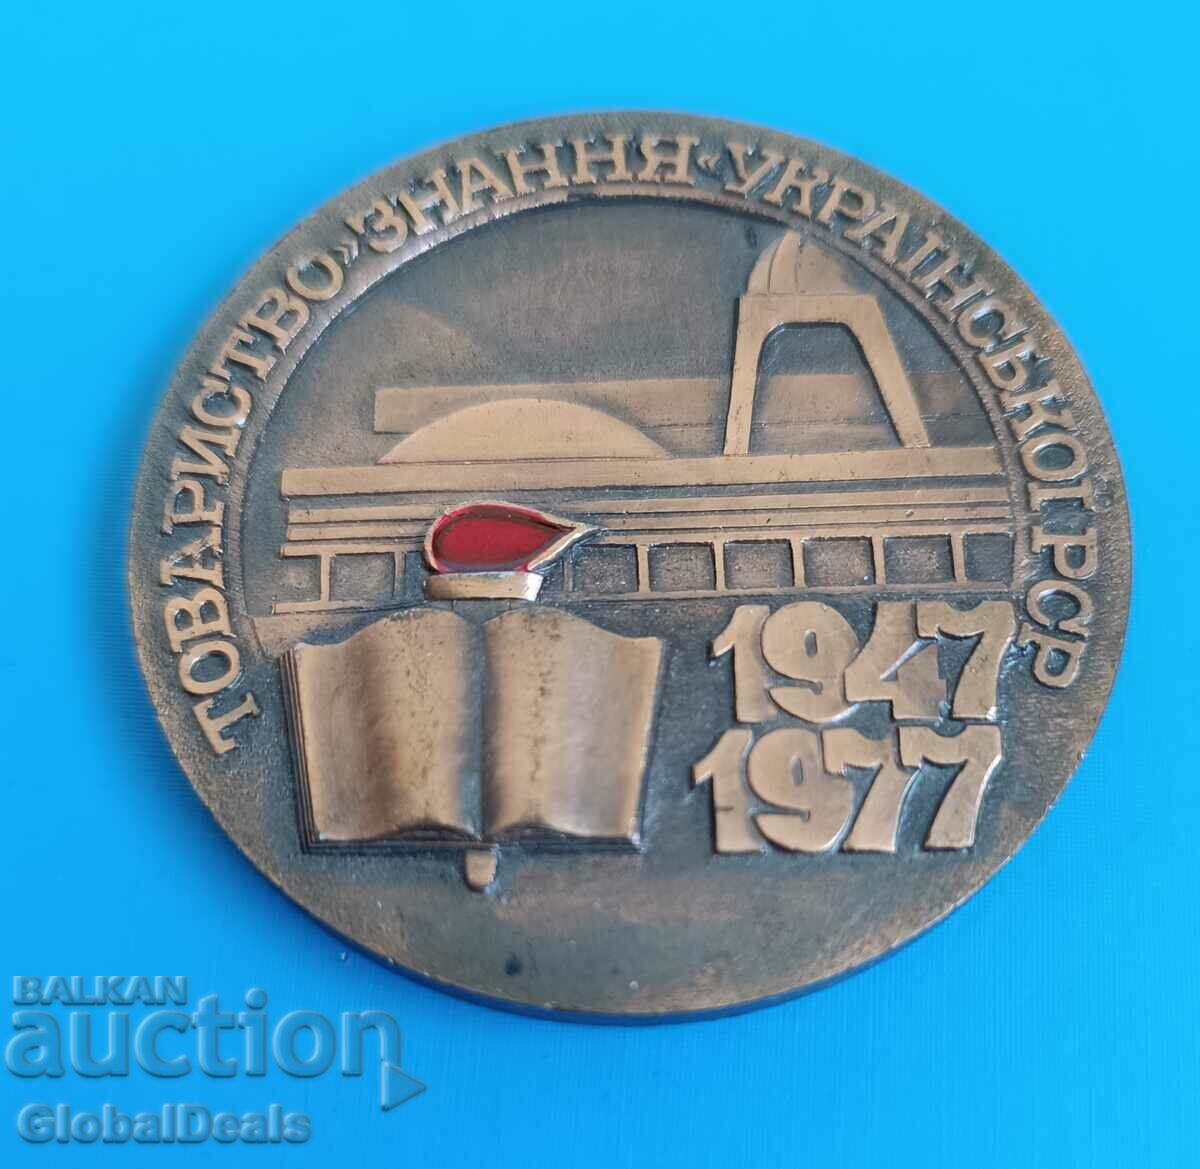 1ст БЗЦ -Медал, Плакет 30 год Приятелство с Украинска СССР